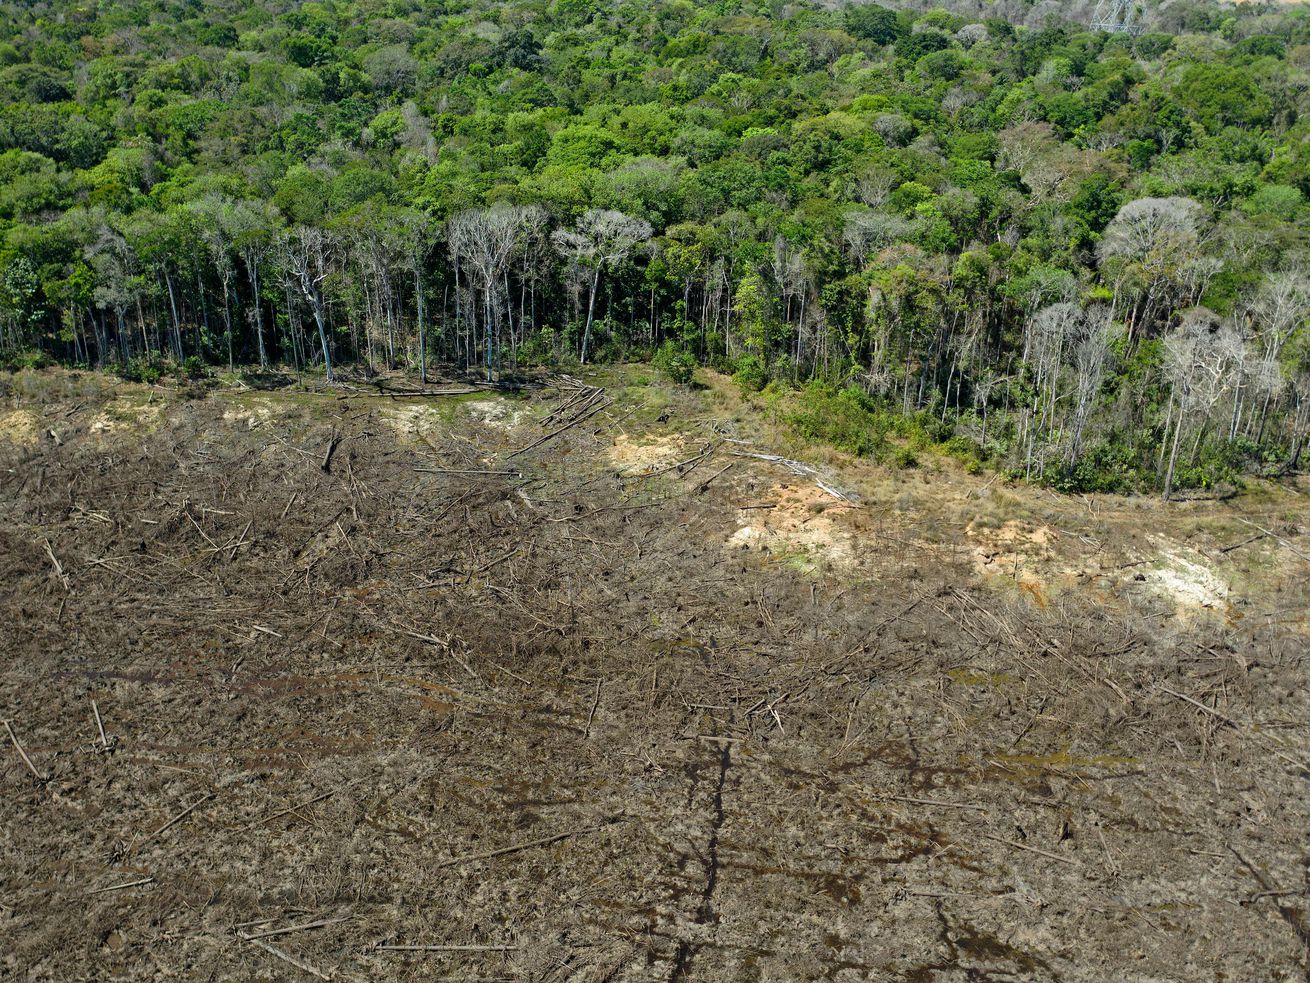 Brazil has already lost 30 Manhattans of Amazon rainforest this year